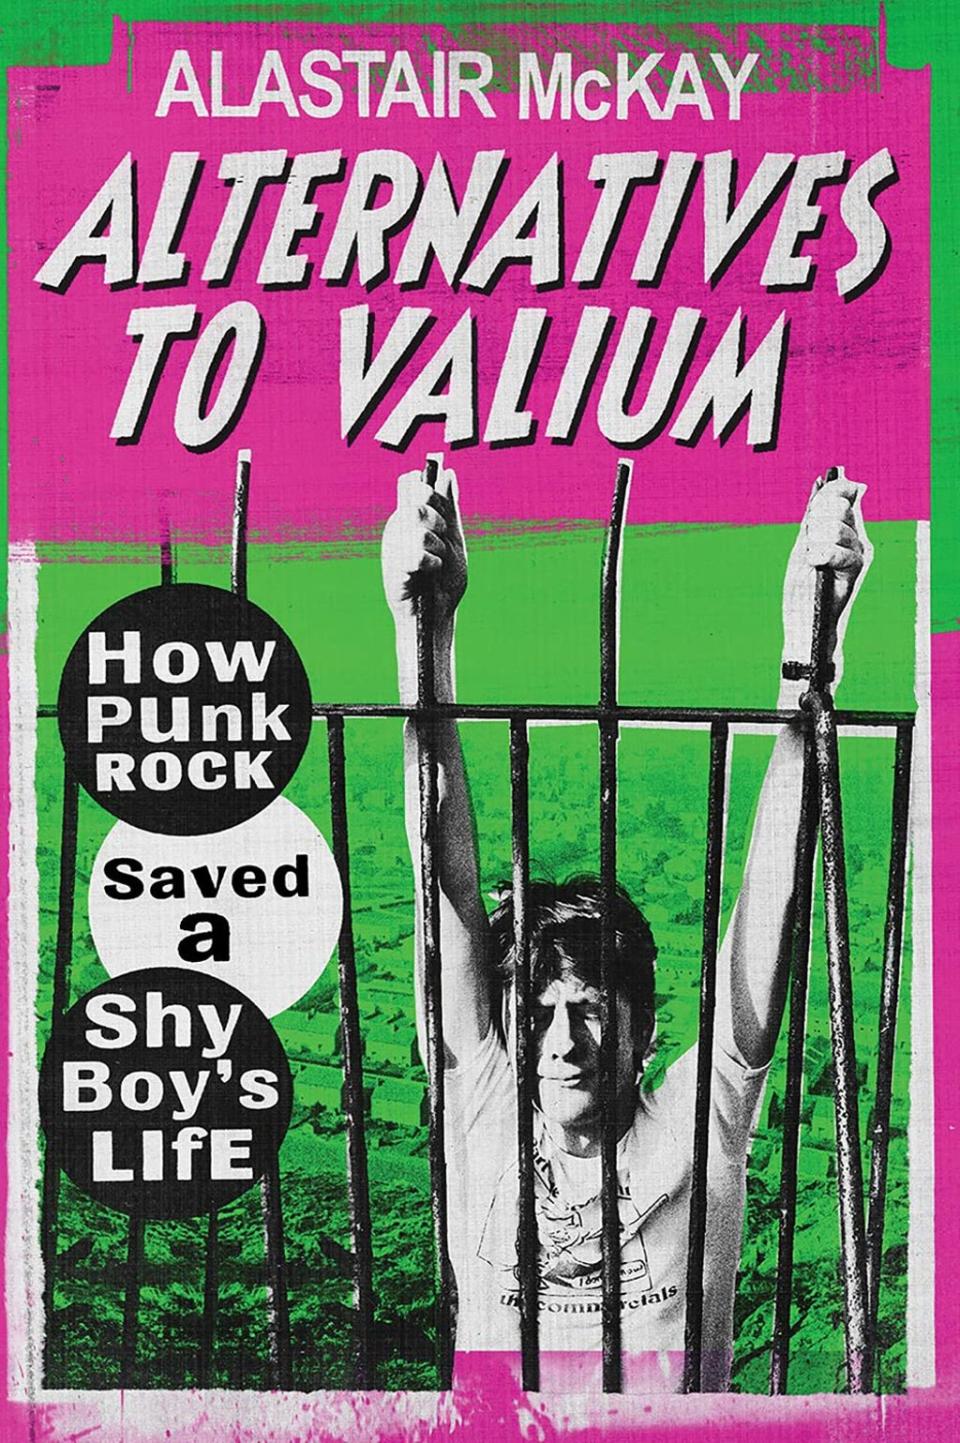 Alternatives to Valium: How Punk Rock Saved a Shy Boy’s Life by Alastair McKay (Birlinn General)